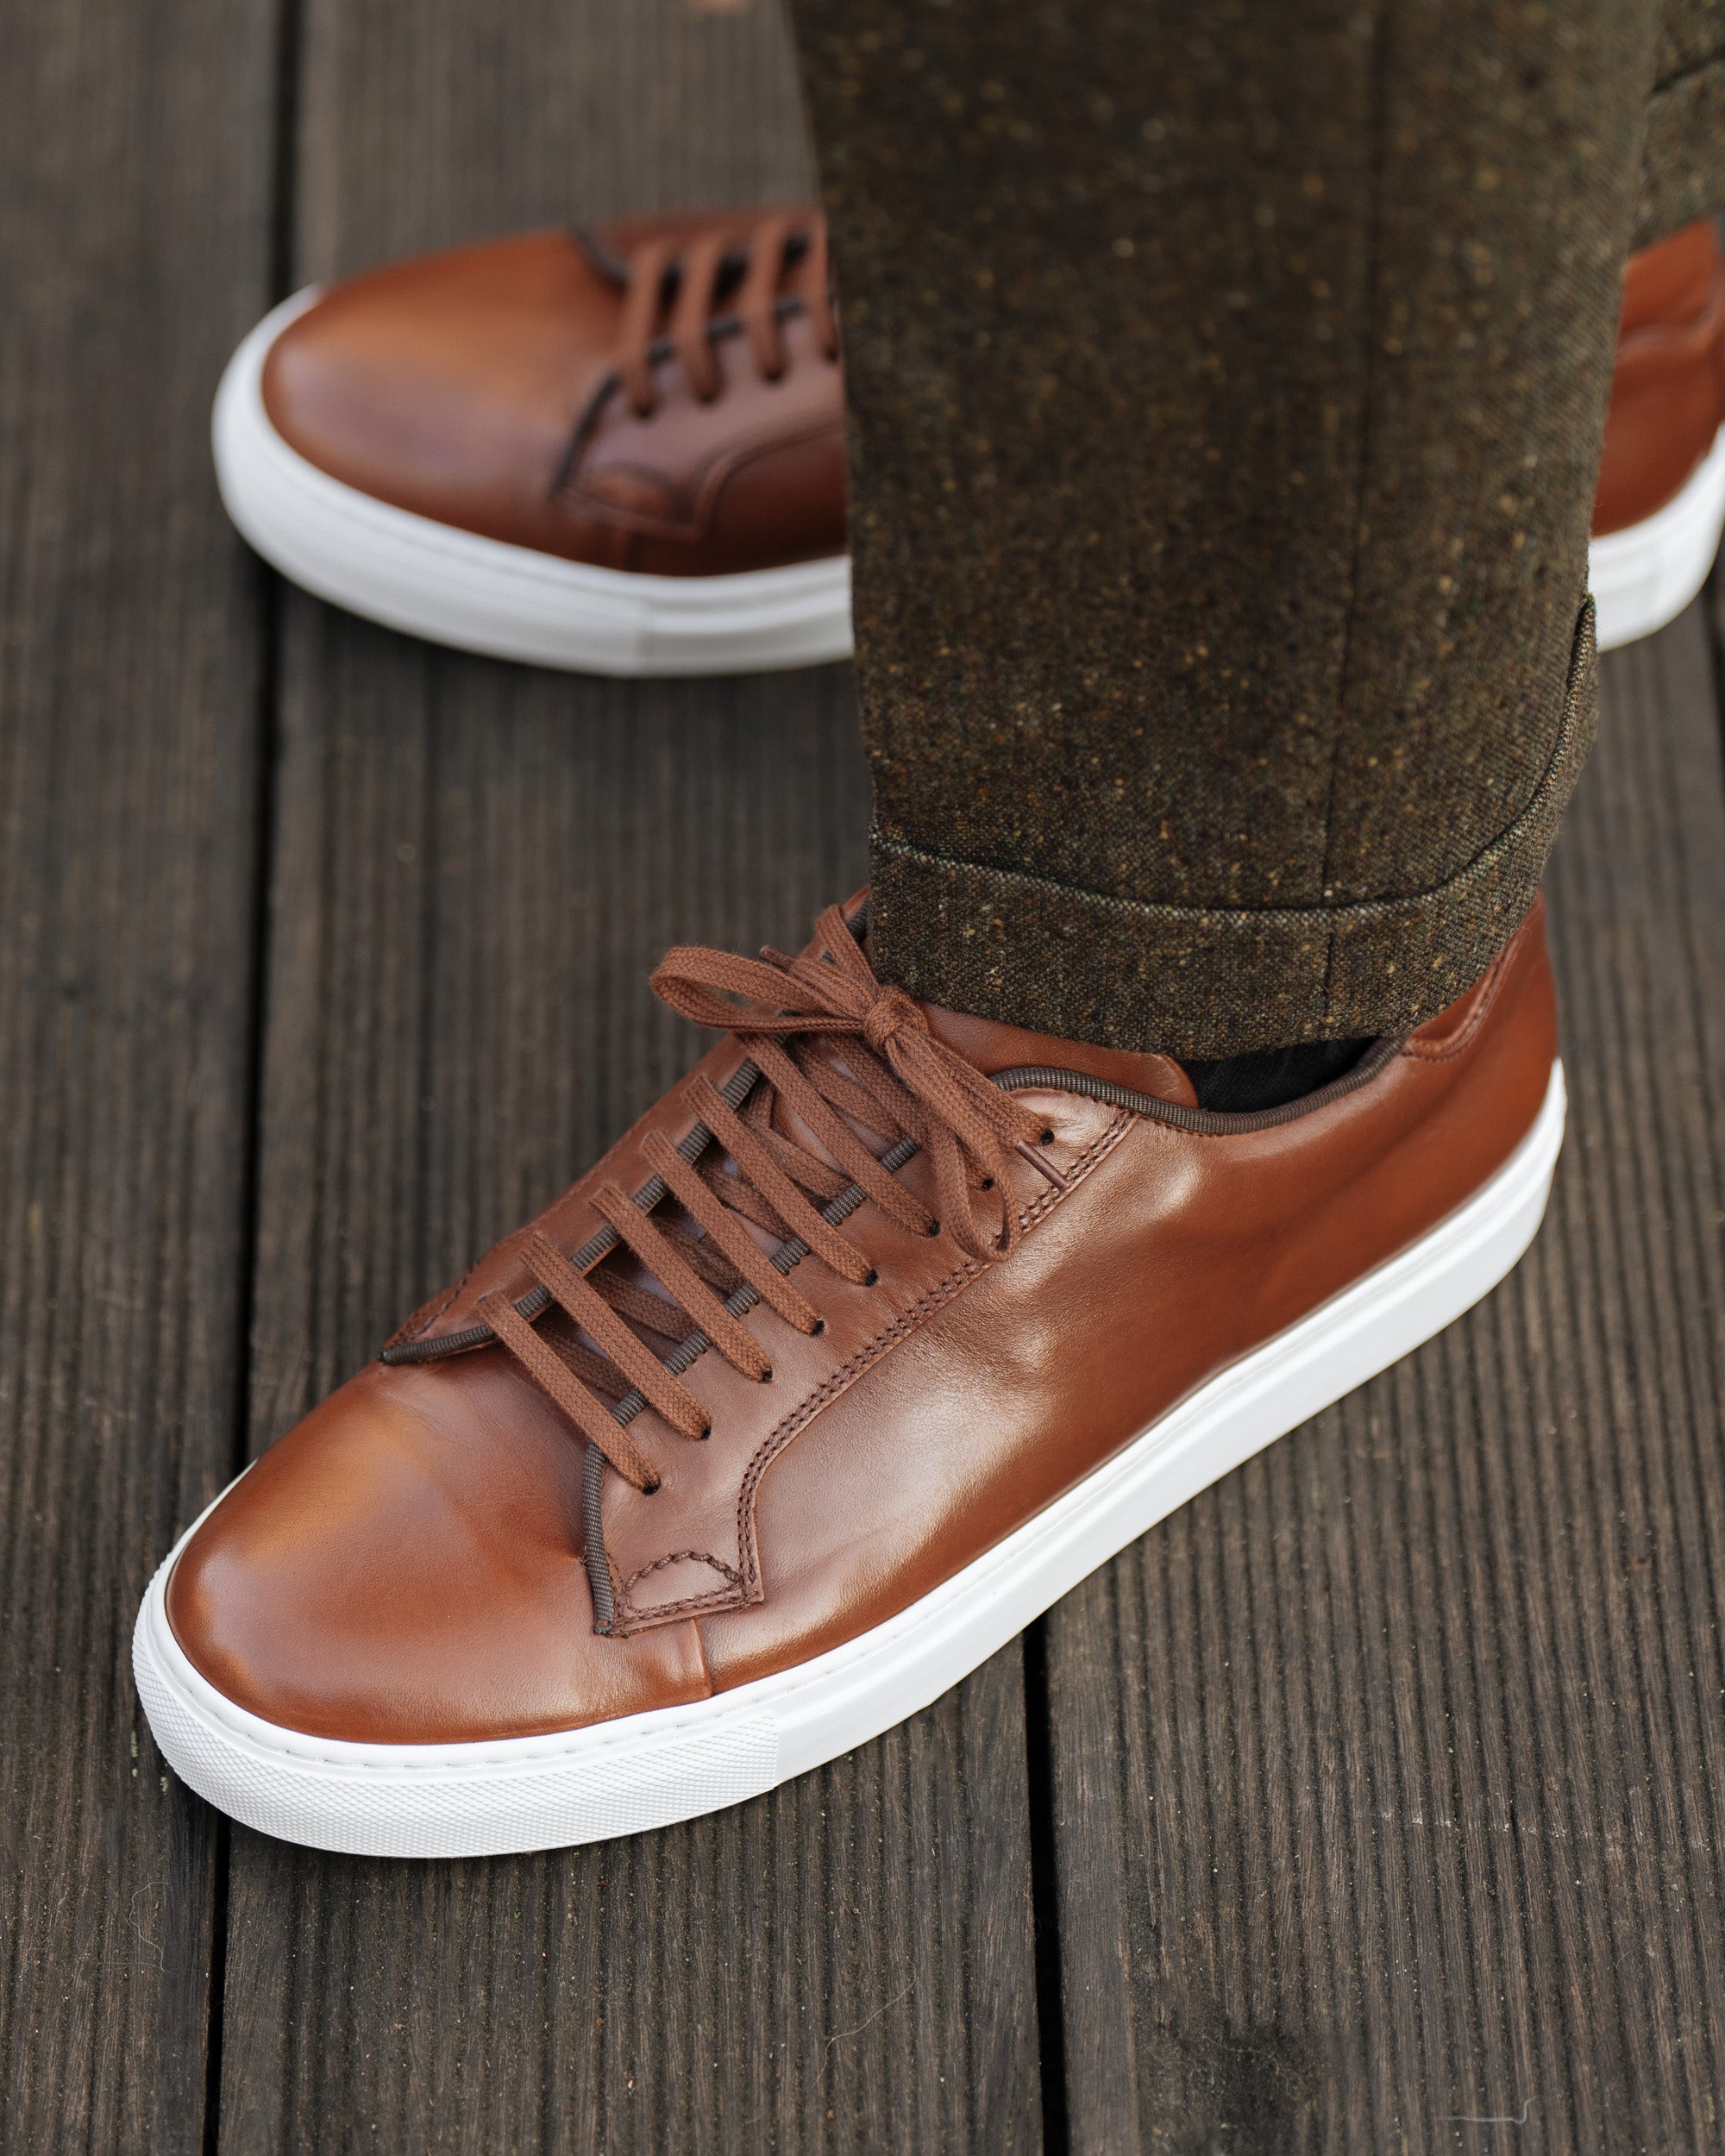 Men's brown leather Sneakers